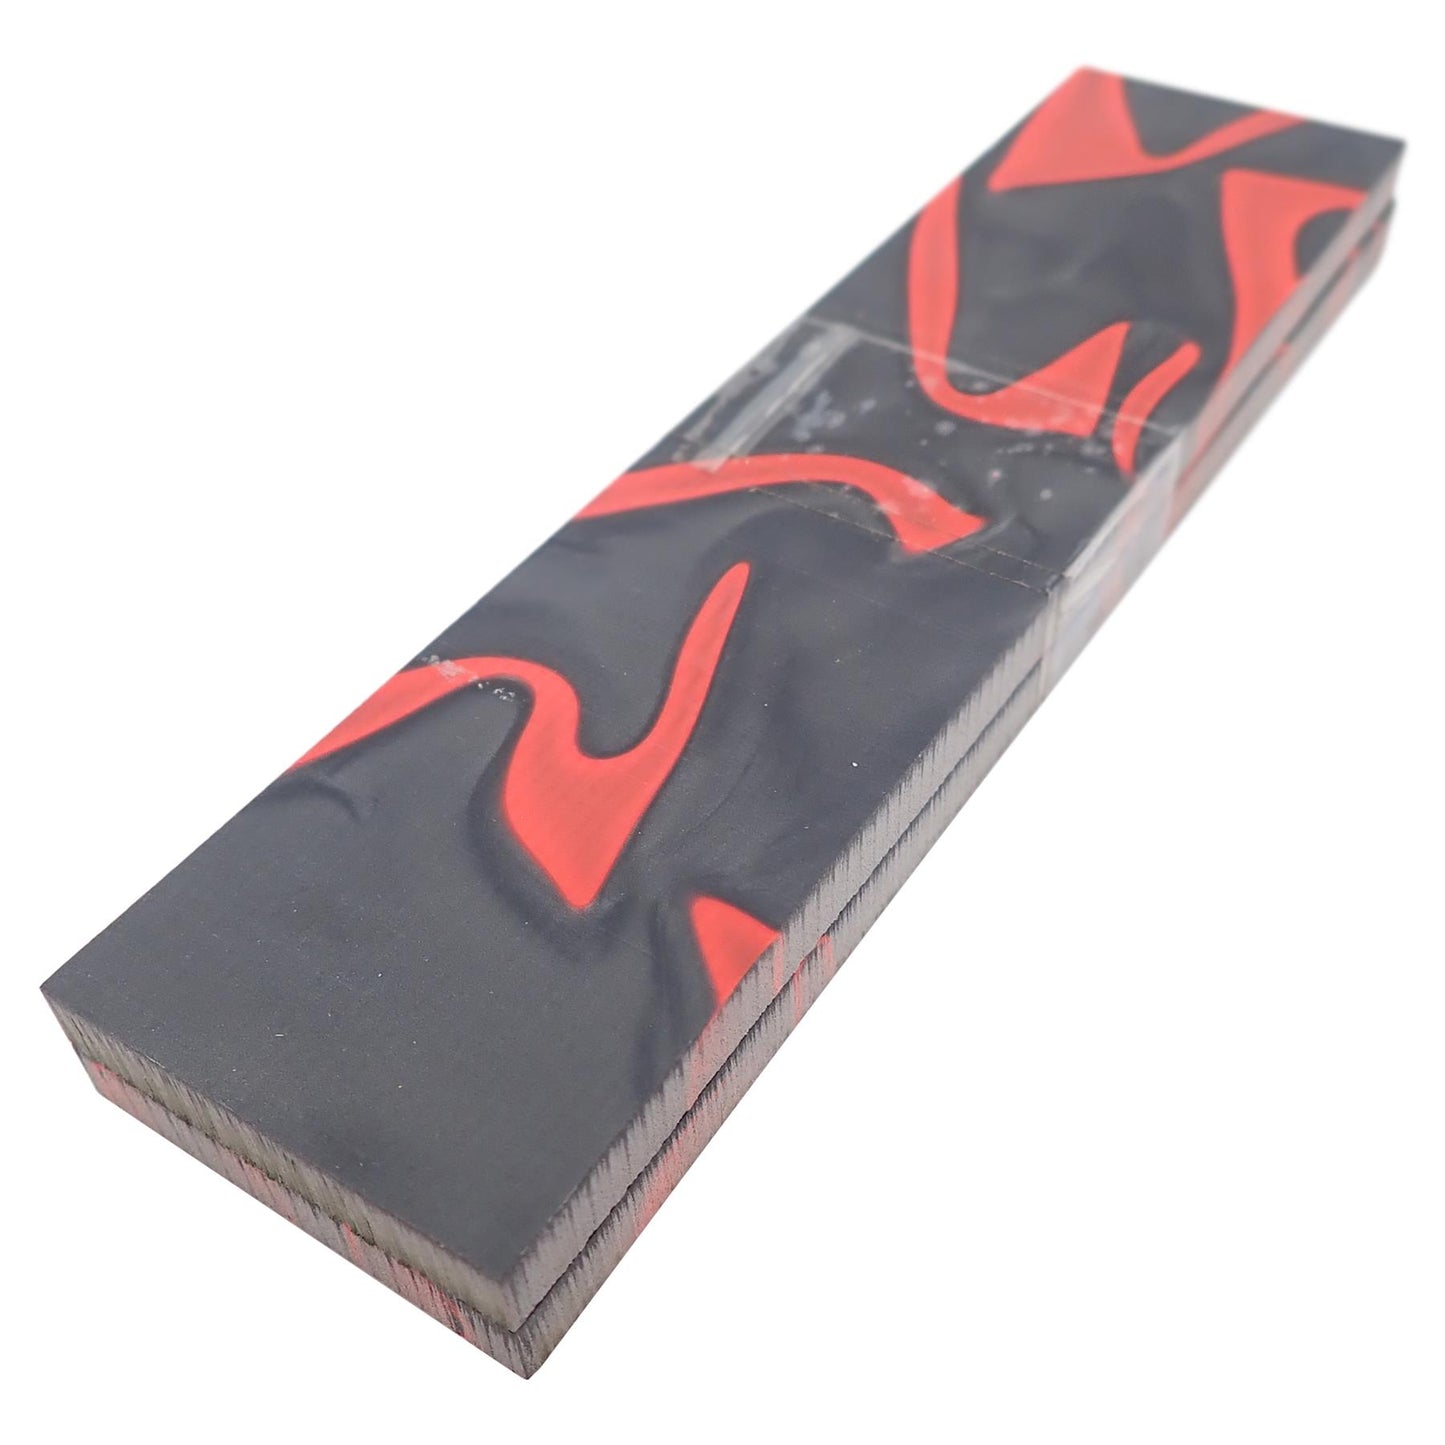 Turners' Mill Lava Flow Abstract Kirinite Acrylic Knife Scales (Pair) - 152.4x38.1x6.35mm (6x1.5x0.25")